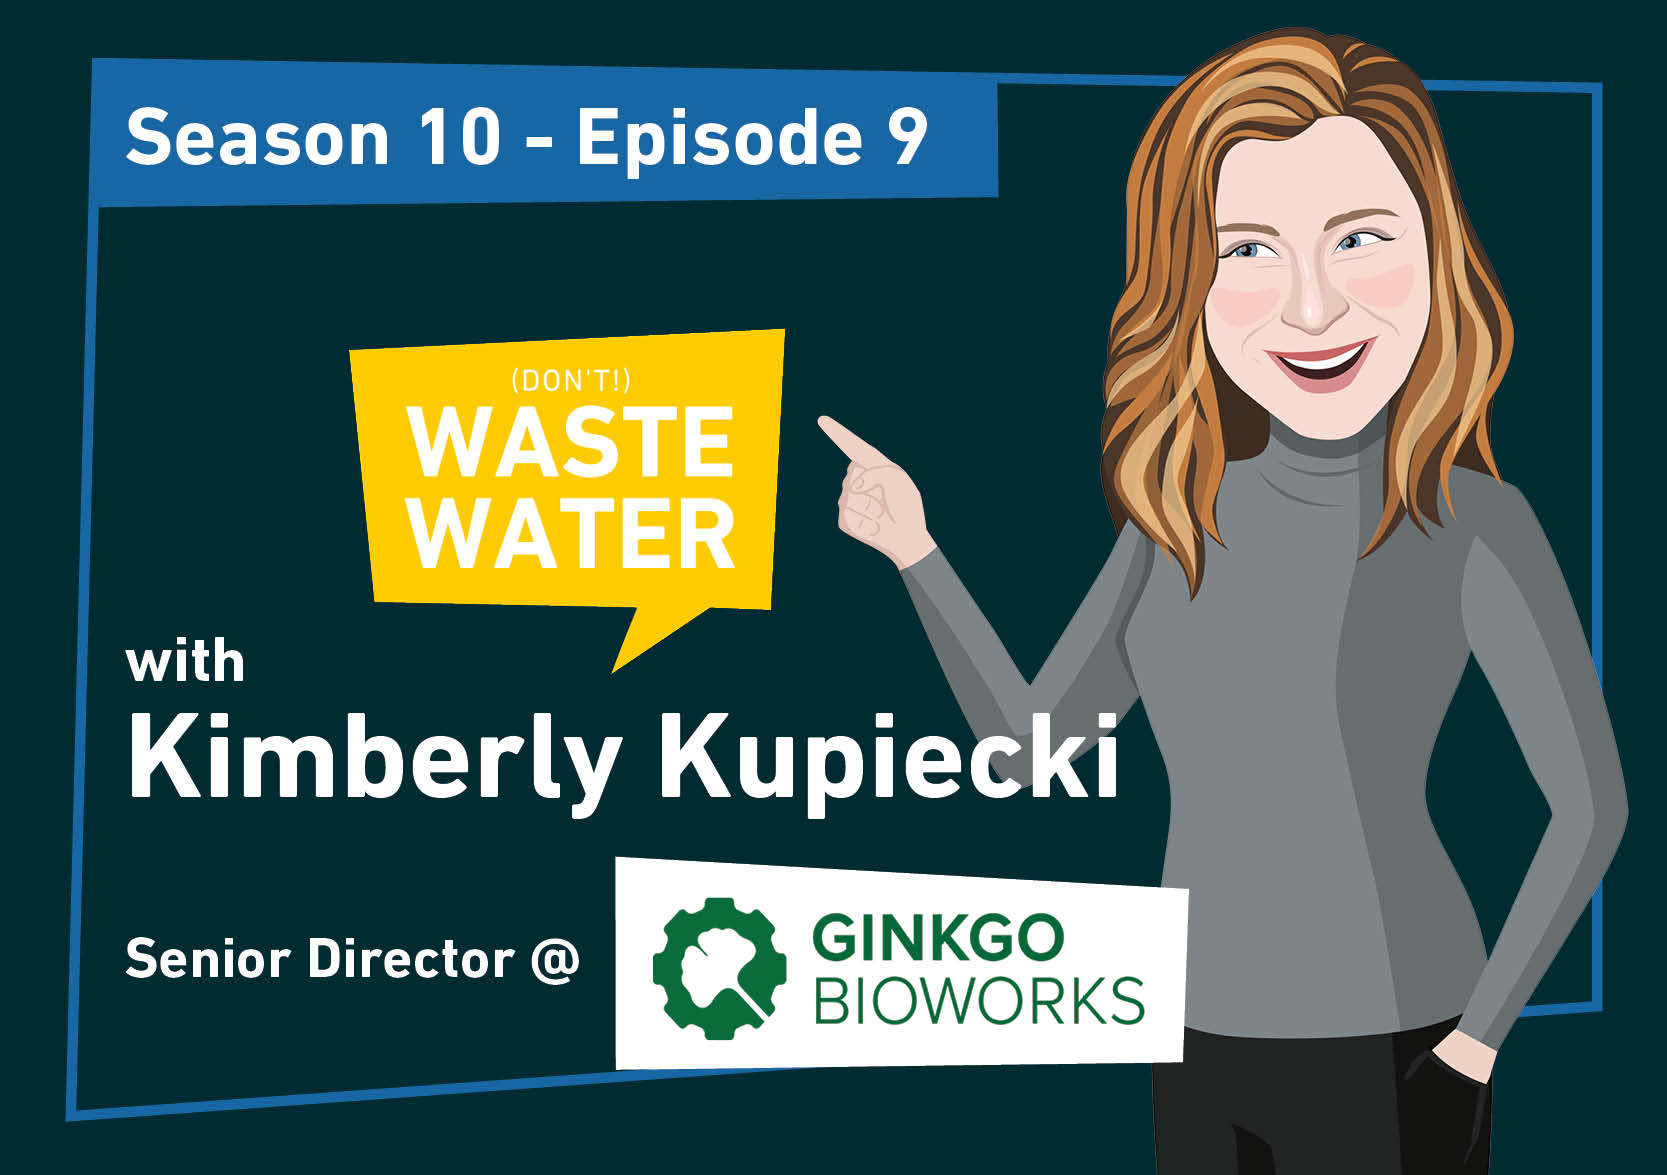 Featured 2 - Gingko Bioworks - Kimberly Kupiecki